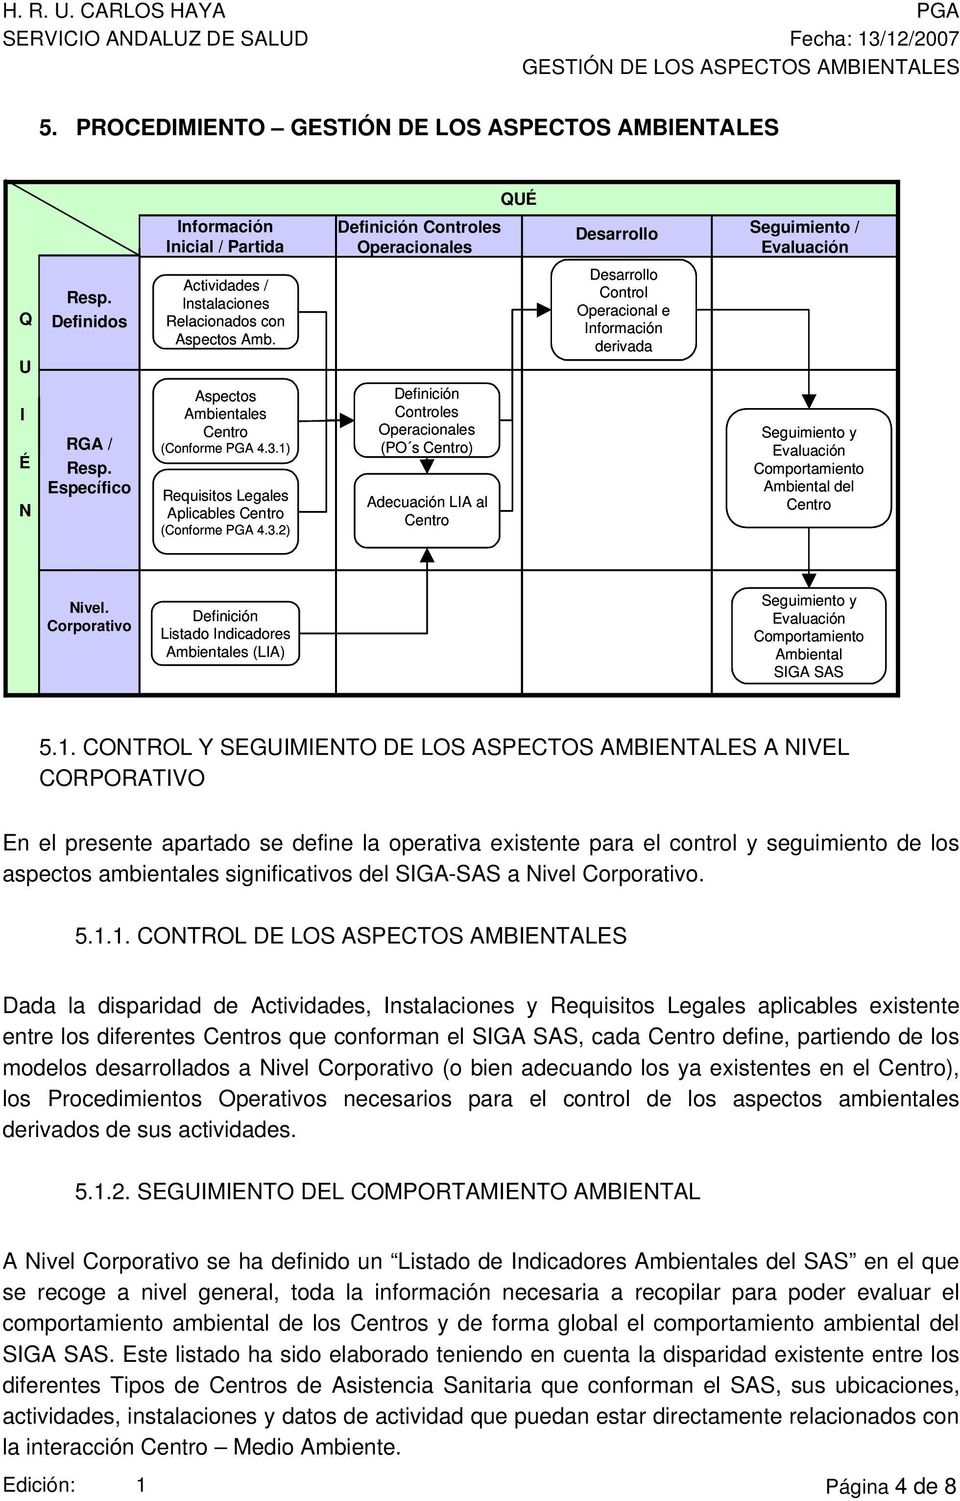 1) Requisitos Legales Aplicables Centro (Conforme PGA 4.3.